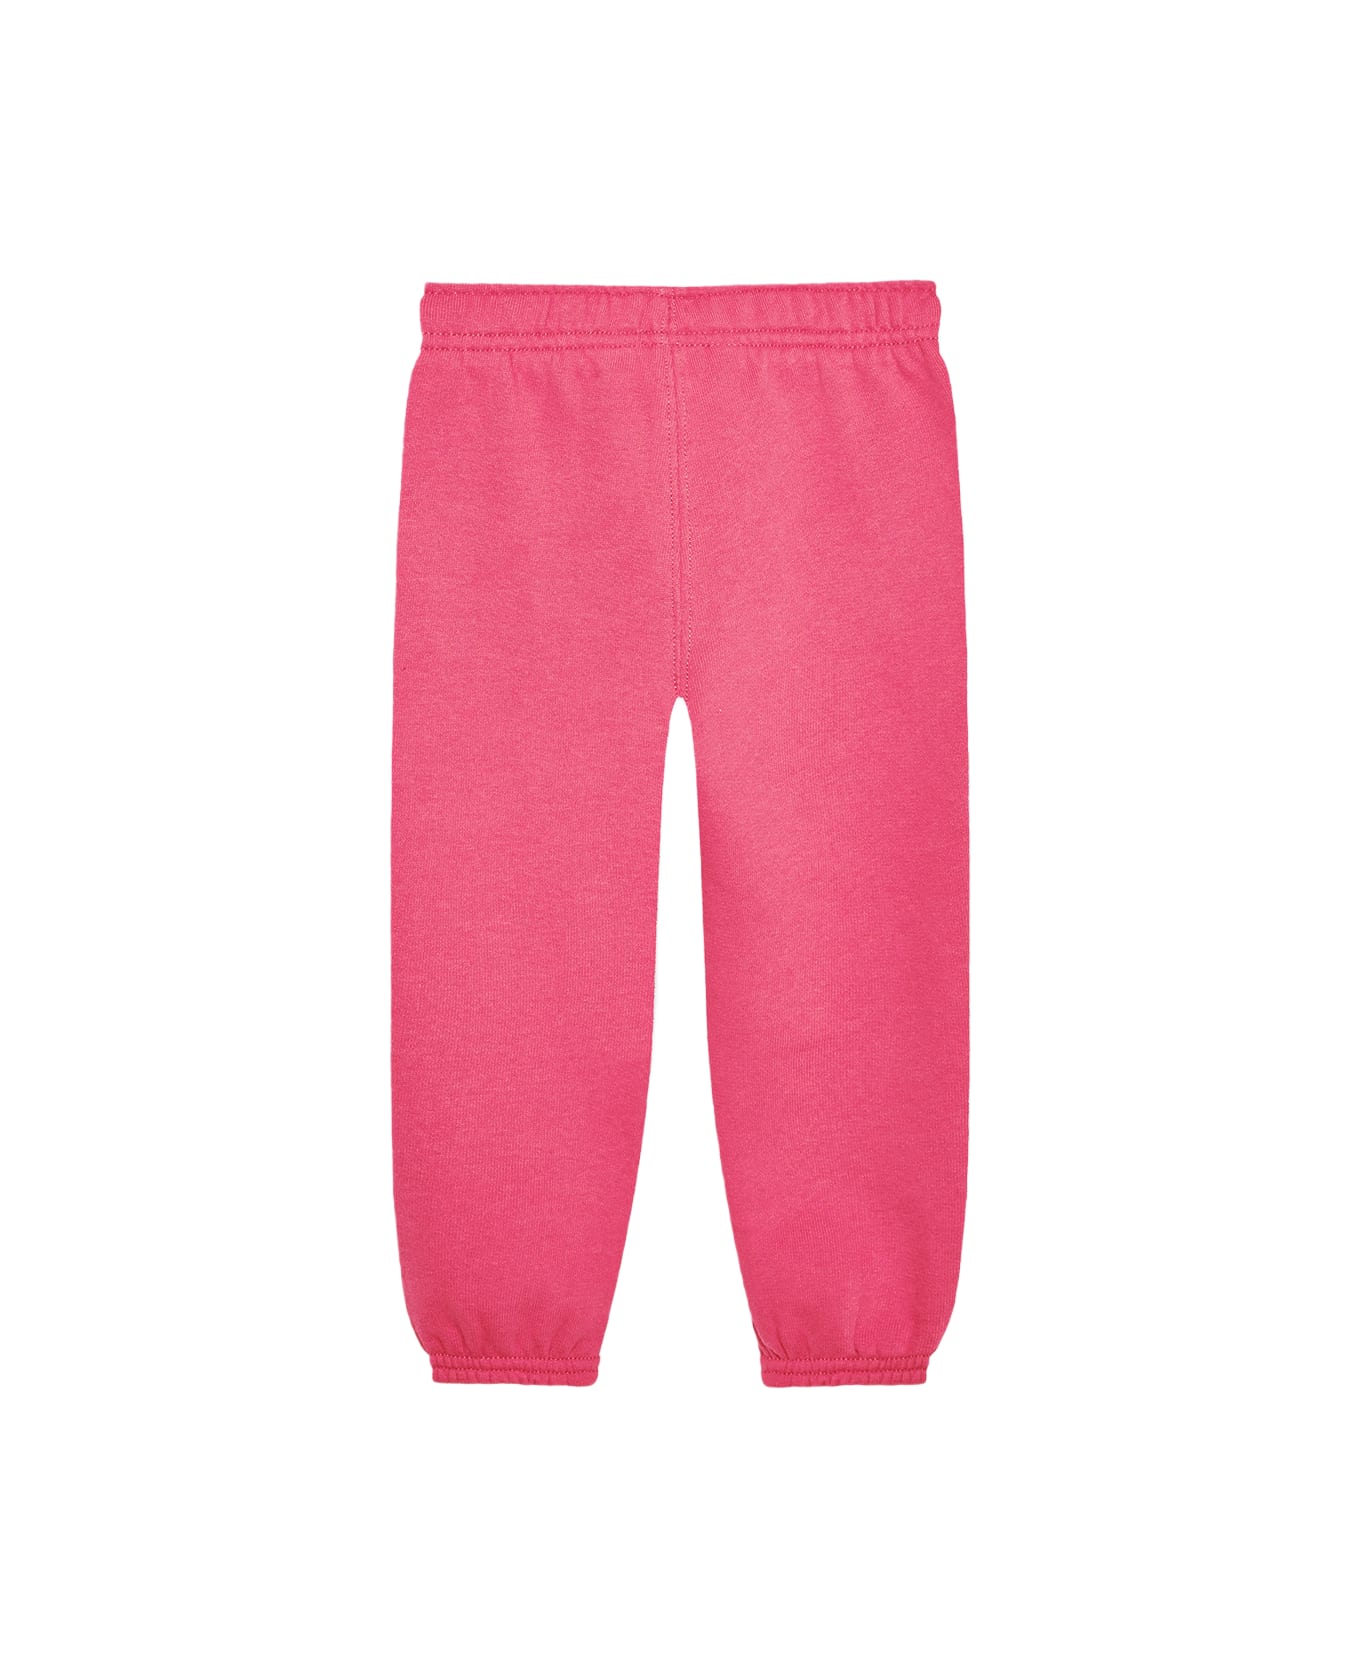 Polo Ralph Lauren Pink Cotton Track Pants - Pink